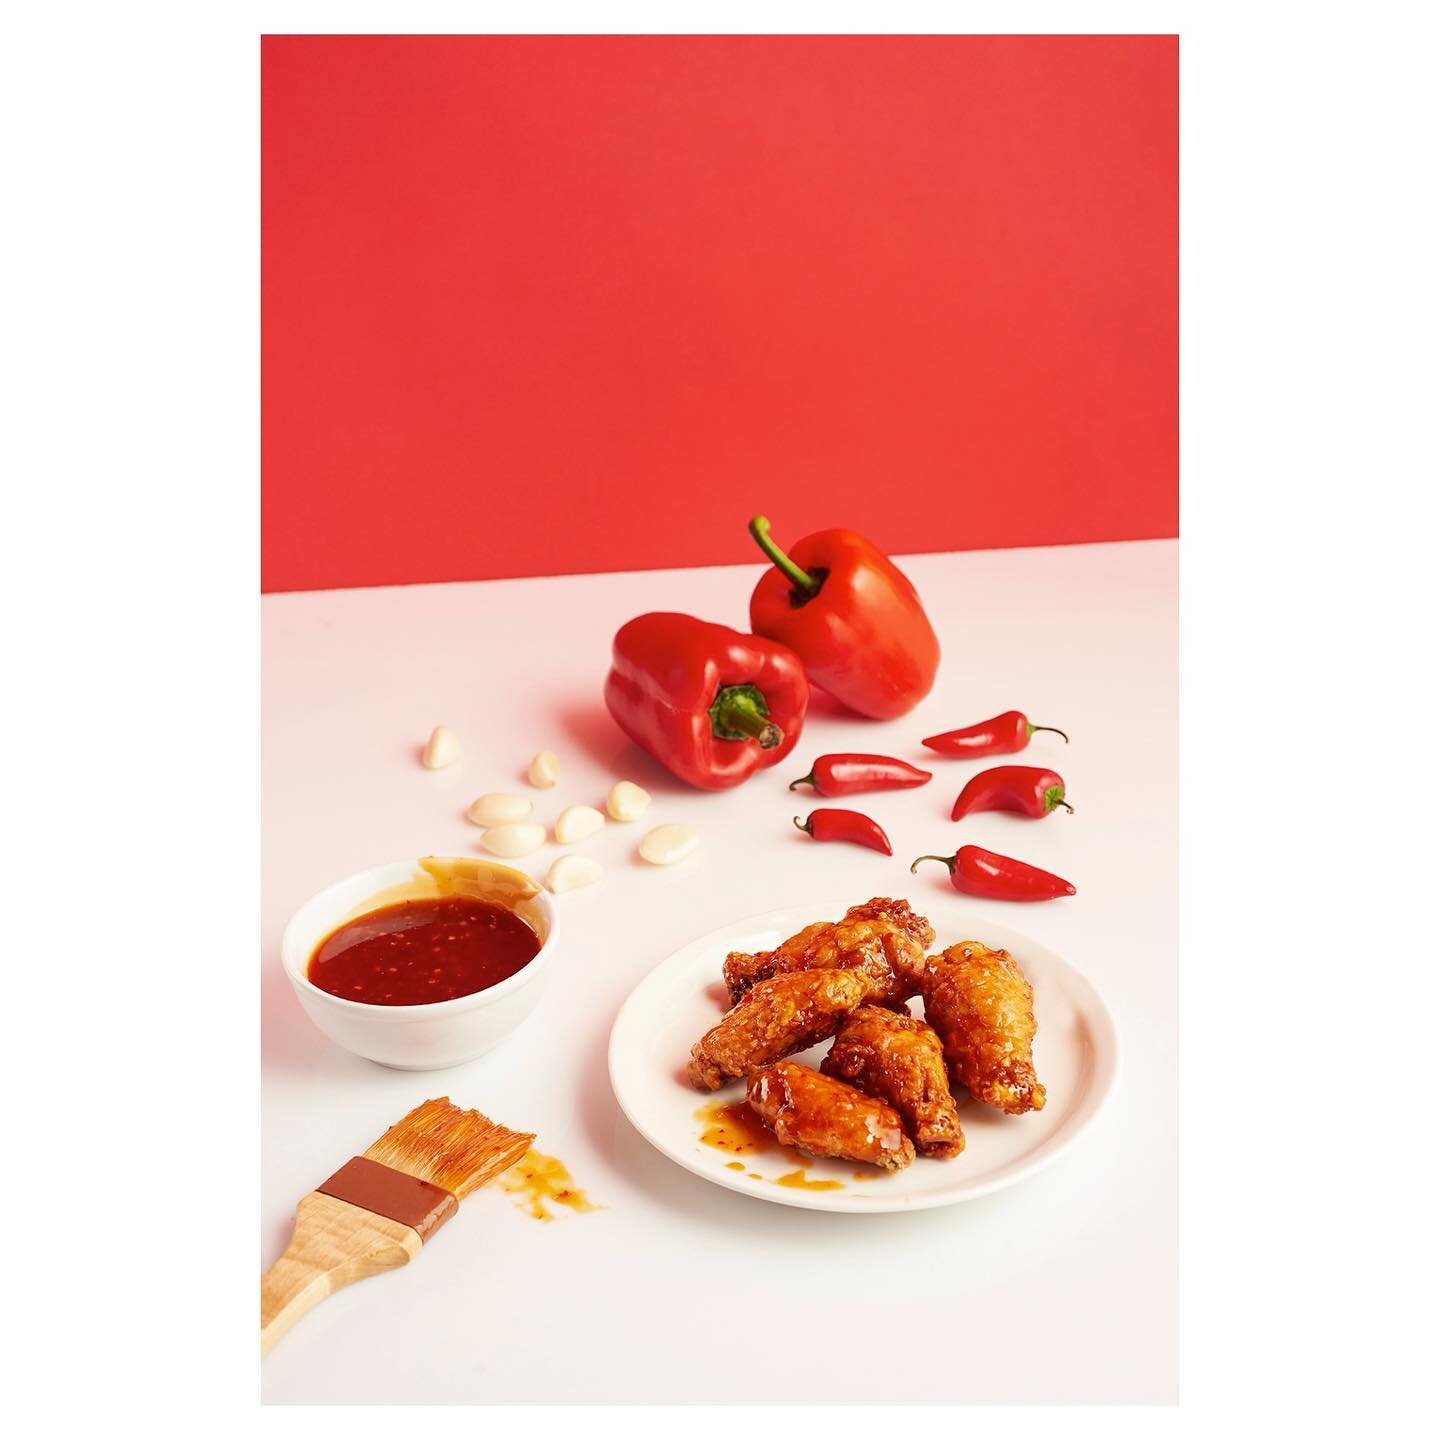 Korean-style hand glazed double fried chicken +new promo work for @bonchonchicken awaiting bold graphics +thanx @leannes_spot  digital tech @bradjamieson 
.
.
.
. #foodphotography